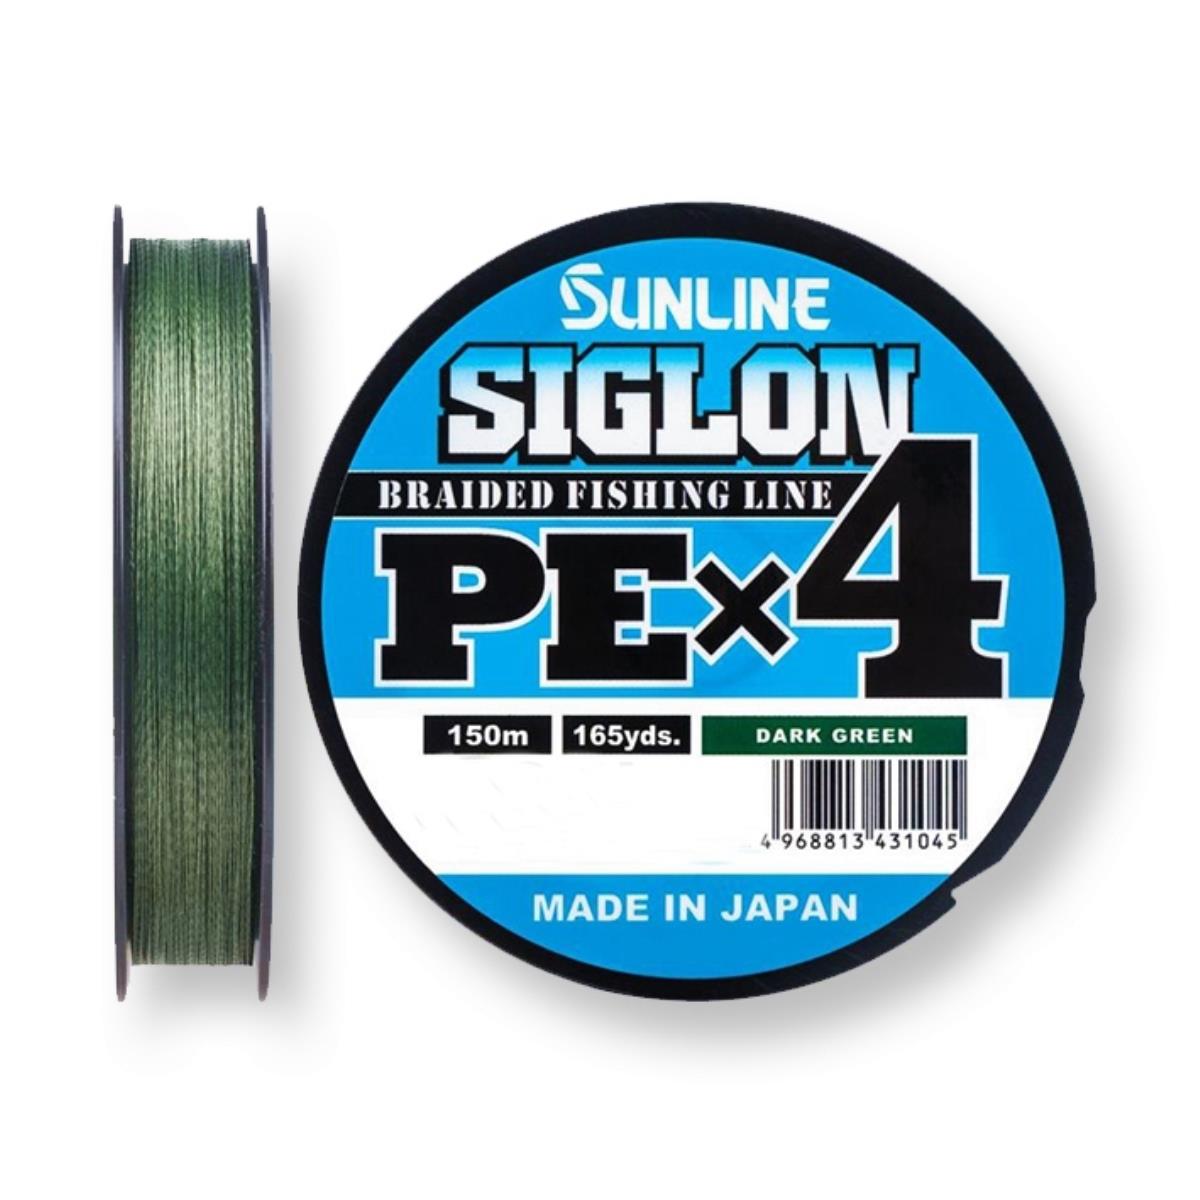 Шнур SIGLON PE×4 150 м (Dark Green) Sunline 189334 SIGLON PE×4 150M(Dark Green) #1/16LB Sunline - фото 1